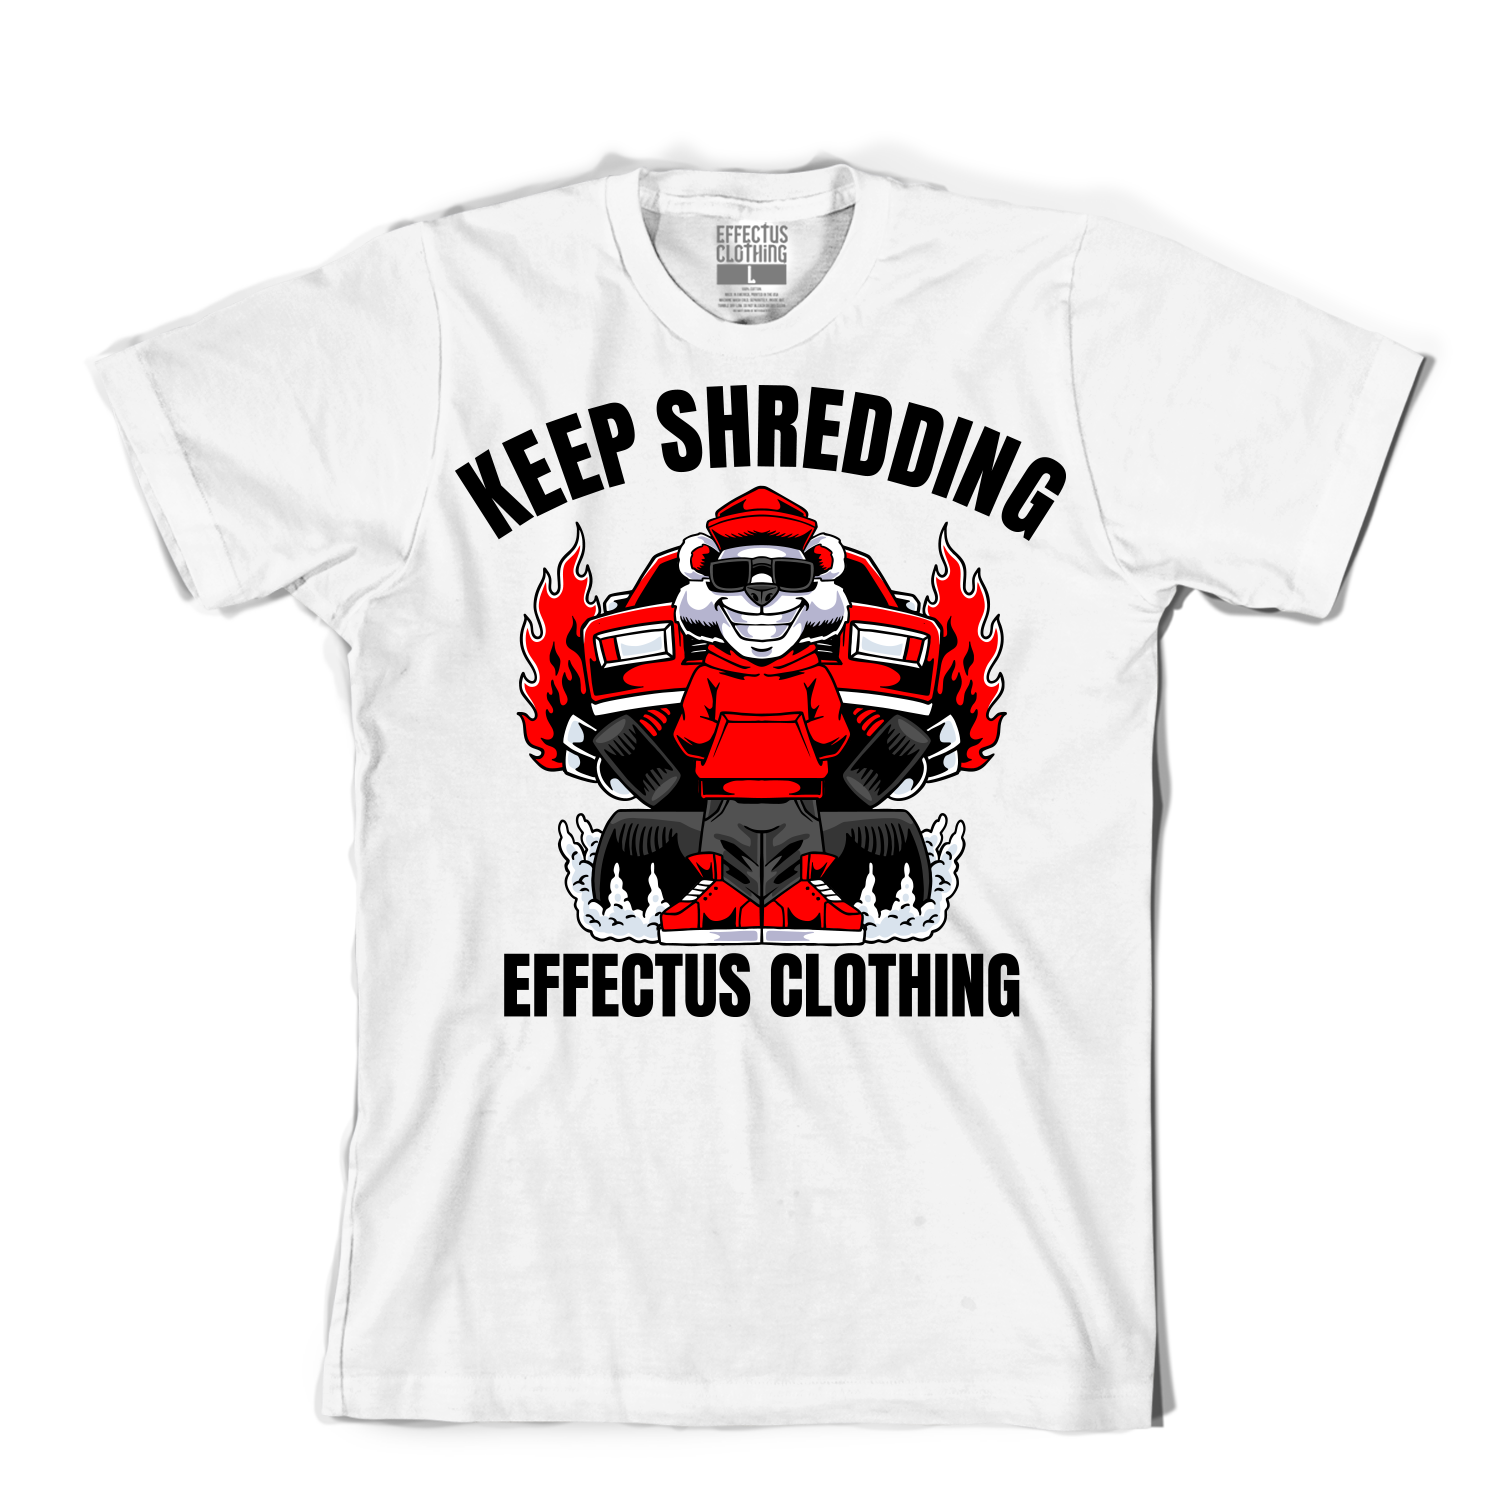 Keep Shredding